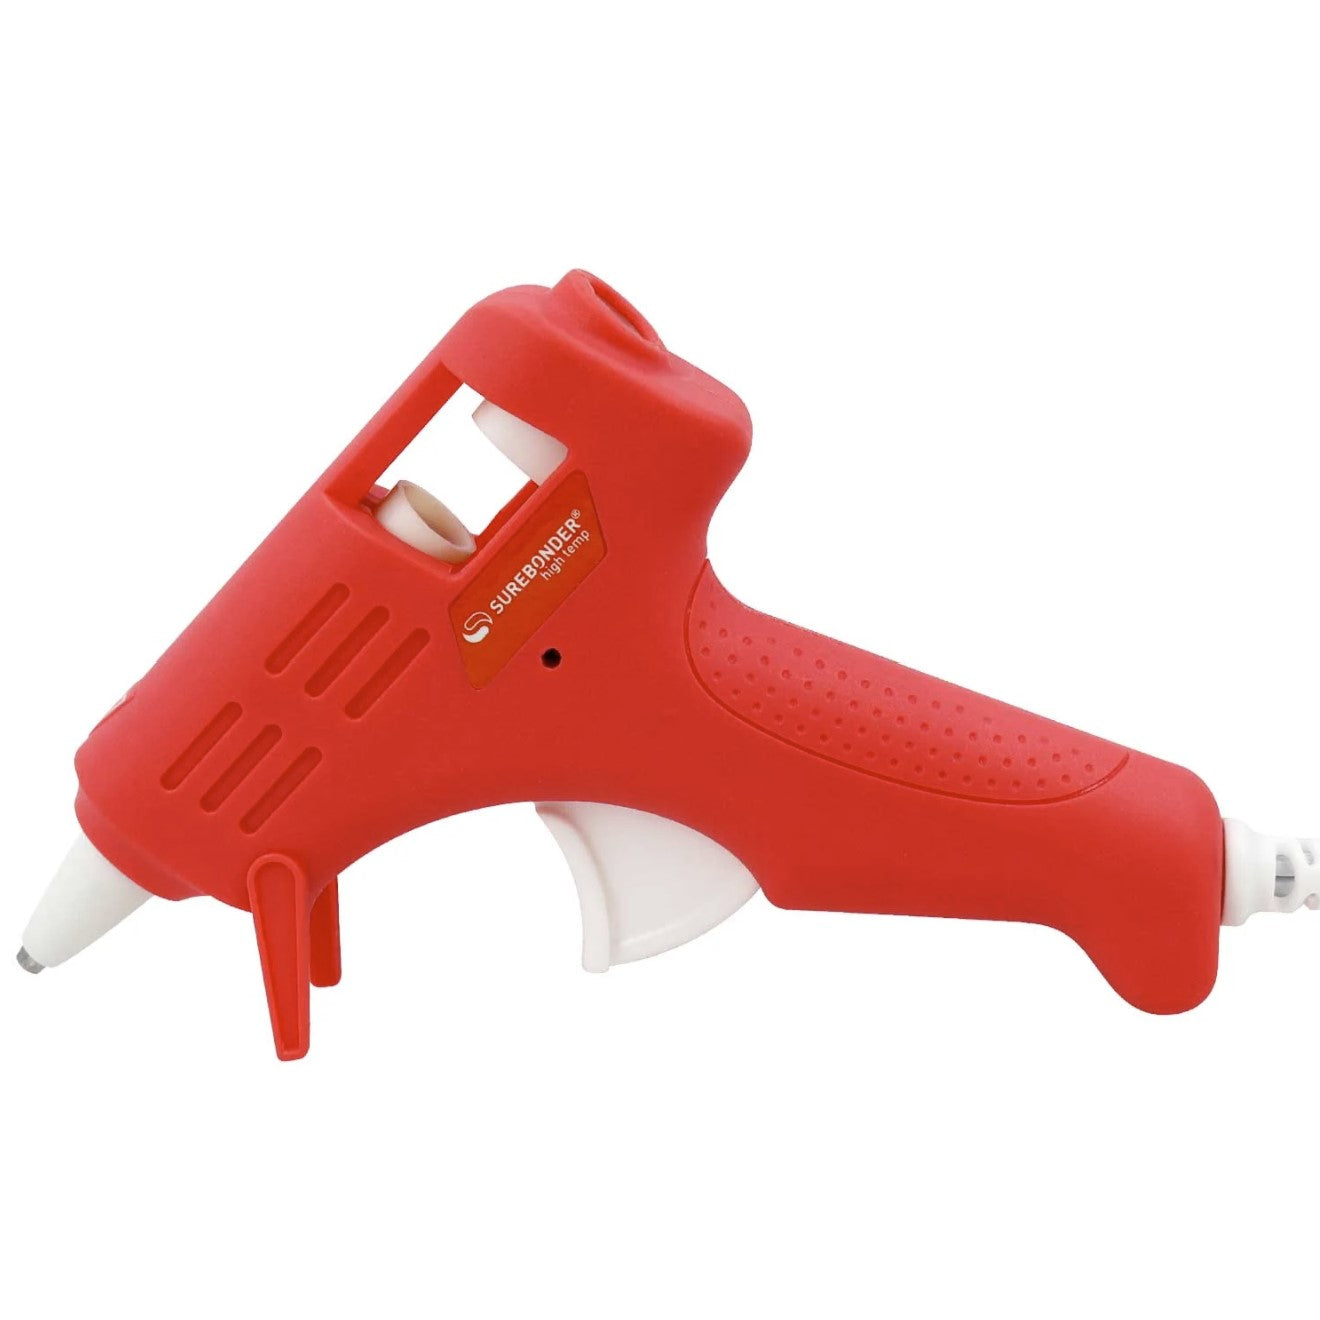 Mini Size High Temp Glue Gun, 10 Watt (Ref. GM-16COR), Coral Red Colored Essentials Series by Surebonder®